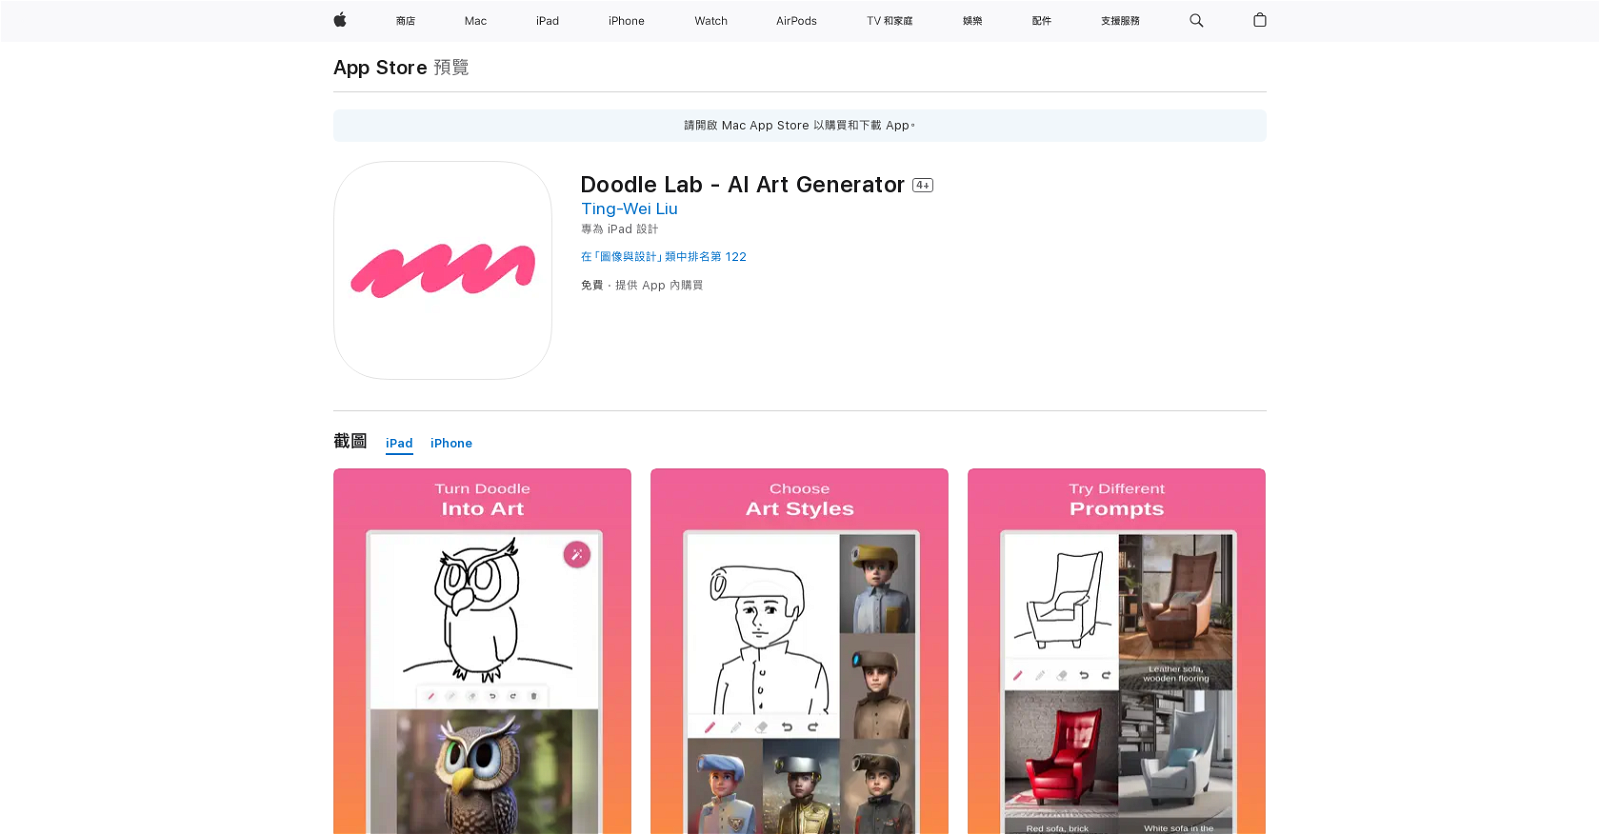 Doodle Lab - AI Art Generator